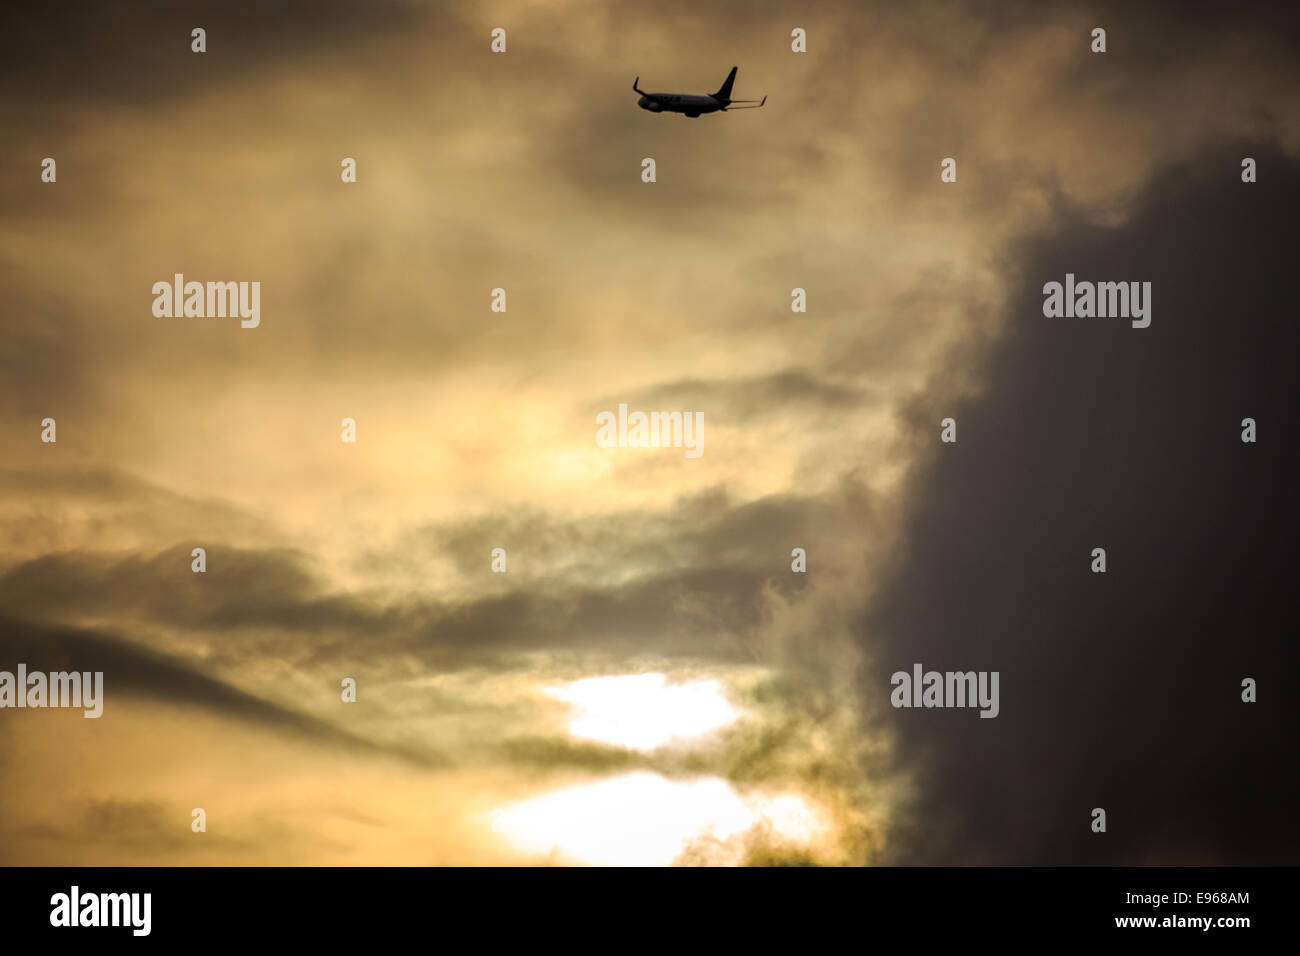 Airplane take off at sunset Stock Photo